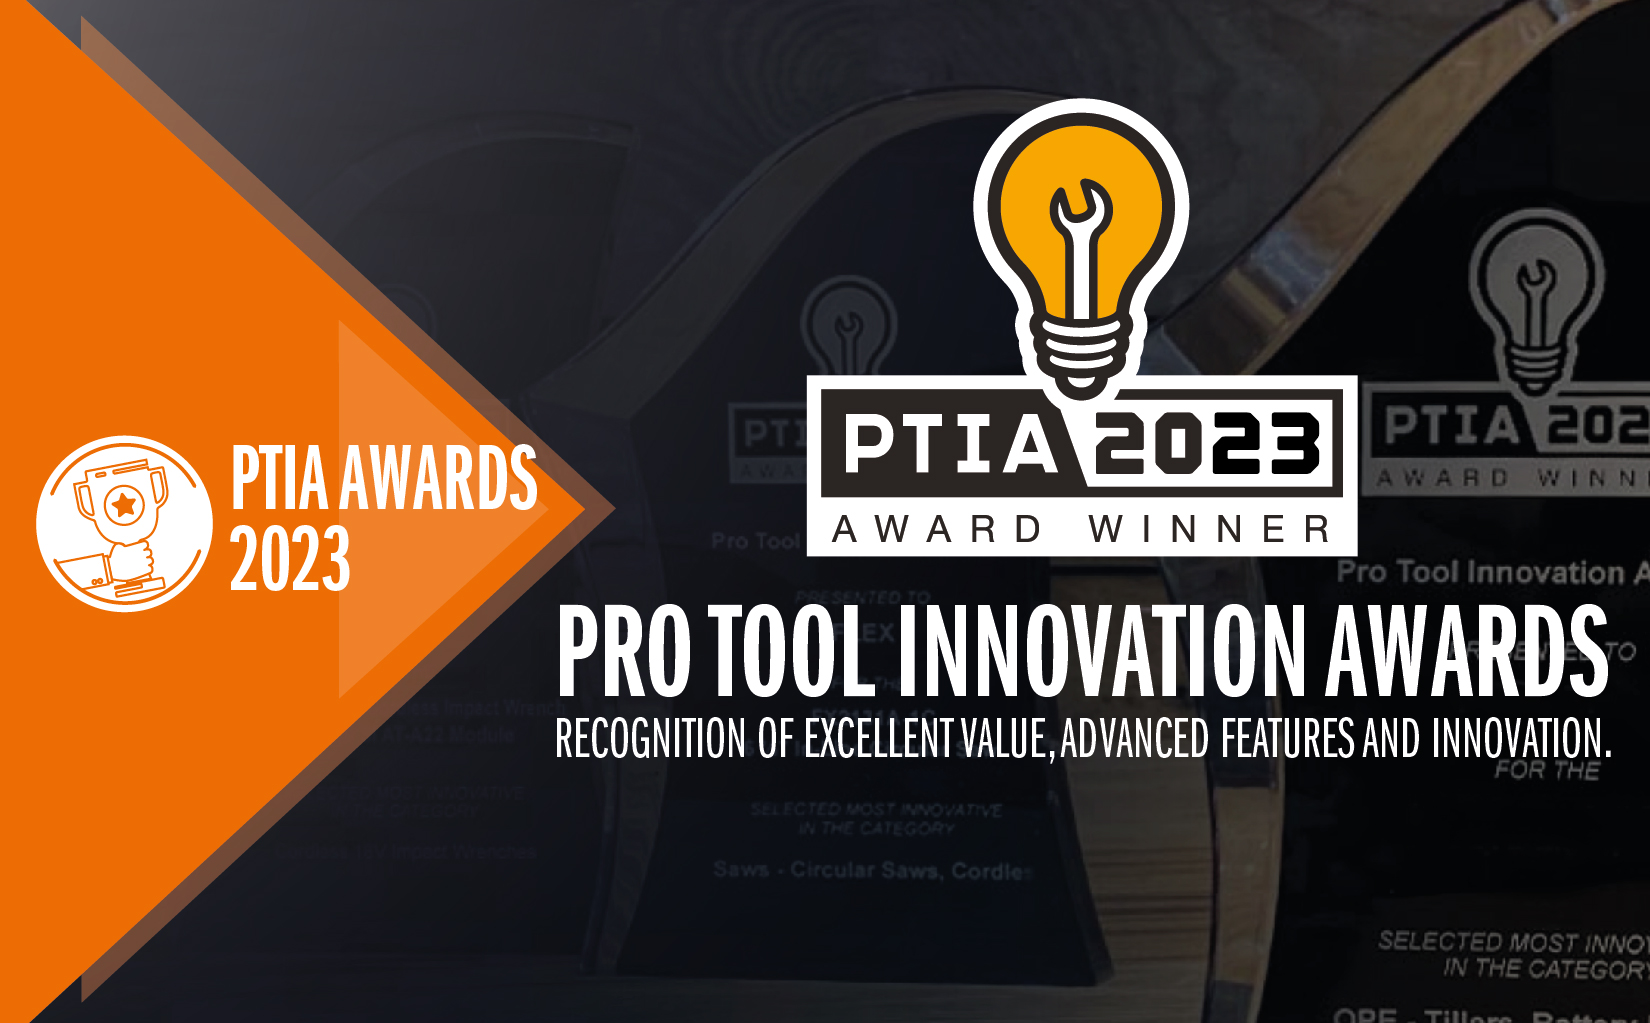 2023 Pro Tool Innovation Award Winner for ITK XTREME Tools